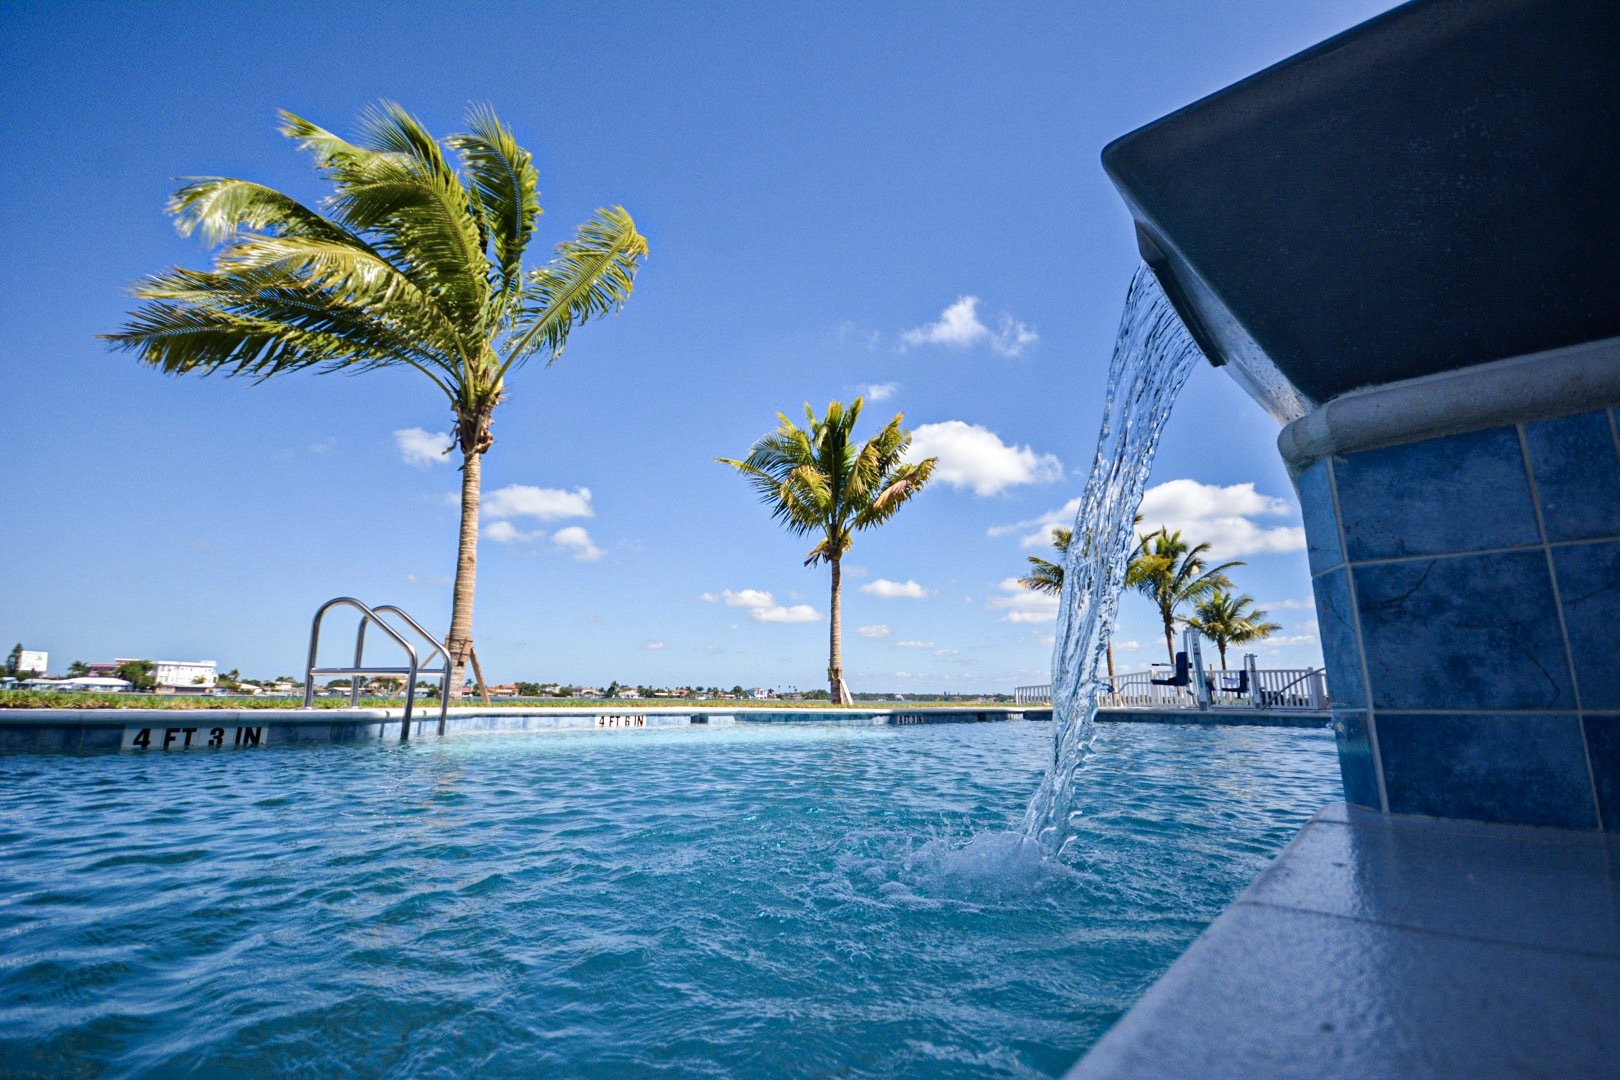 Photo of FUSION Resort, Treasure Island, FL